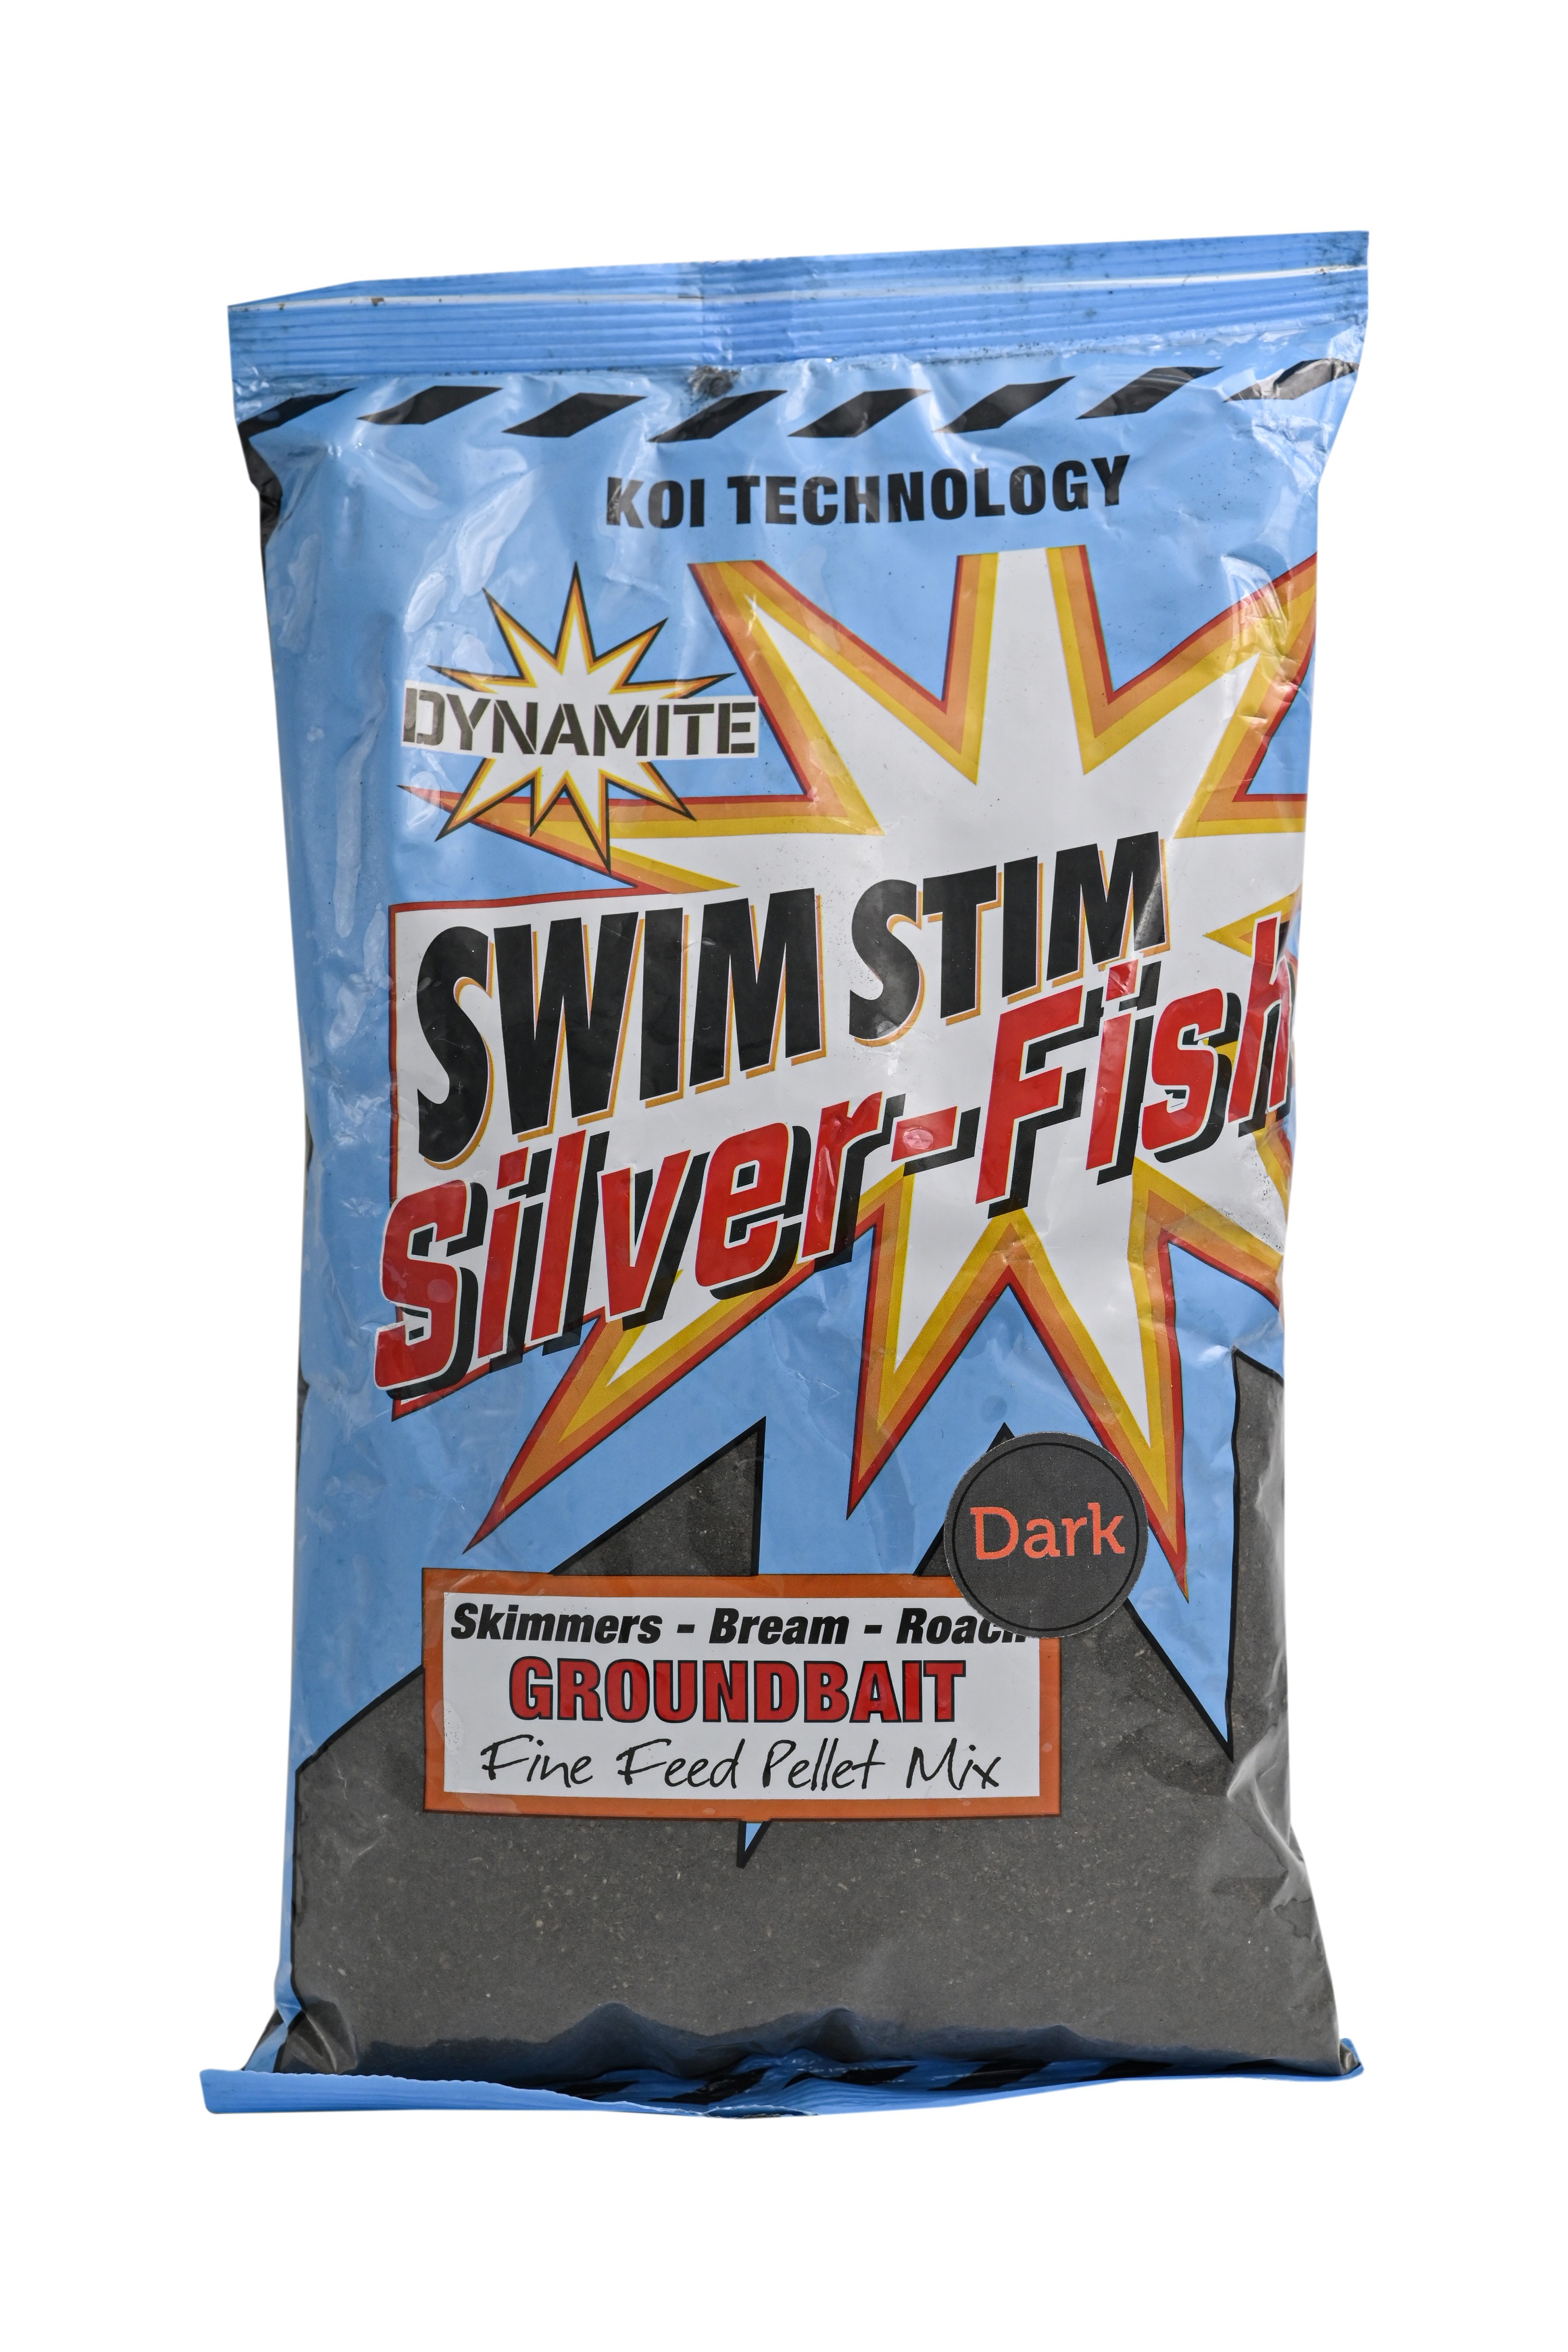 Прикормка Dynamite Baits wim Stim commercial silver fish dark 900гр - фото 1